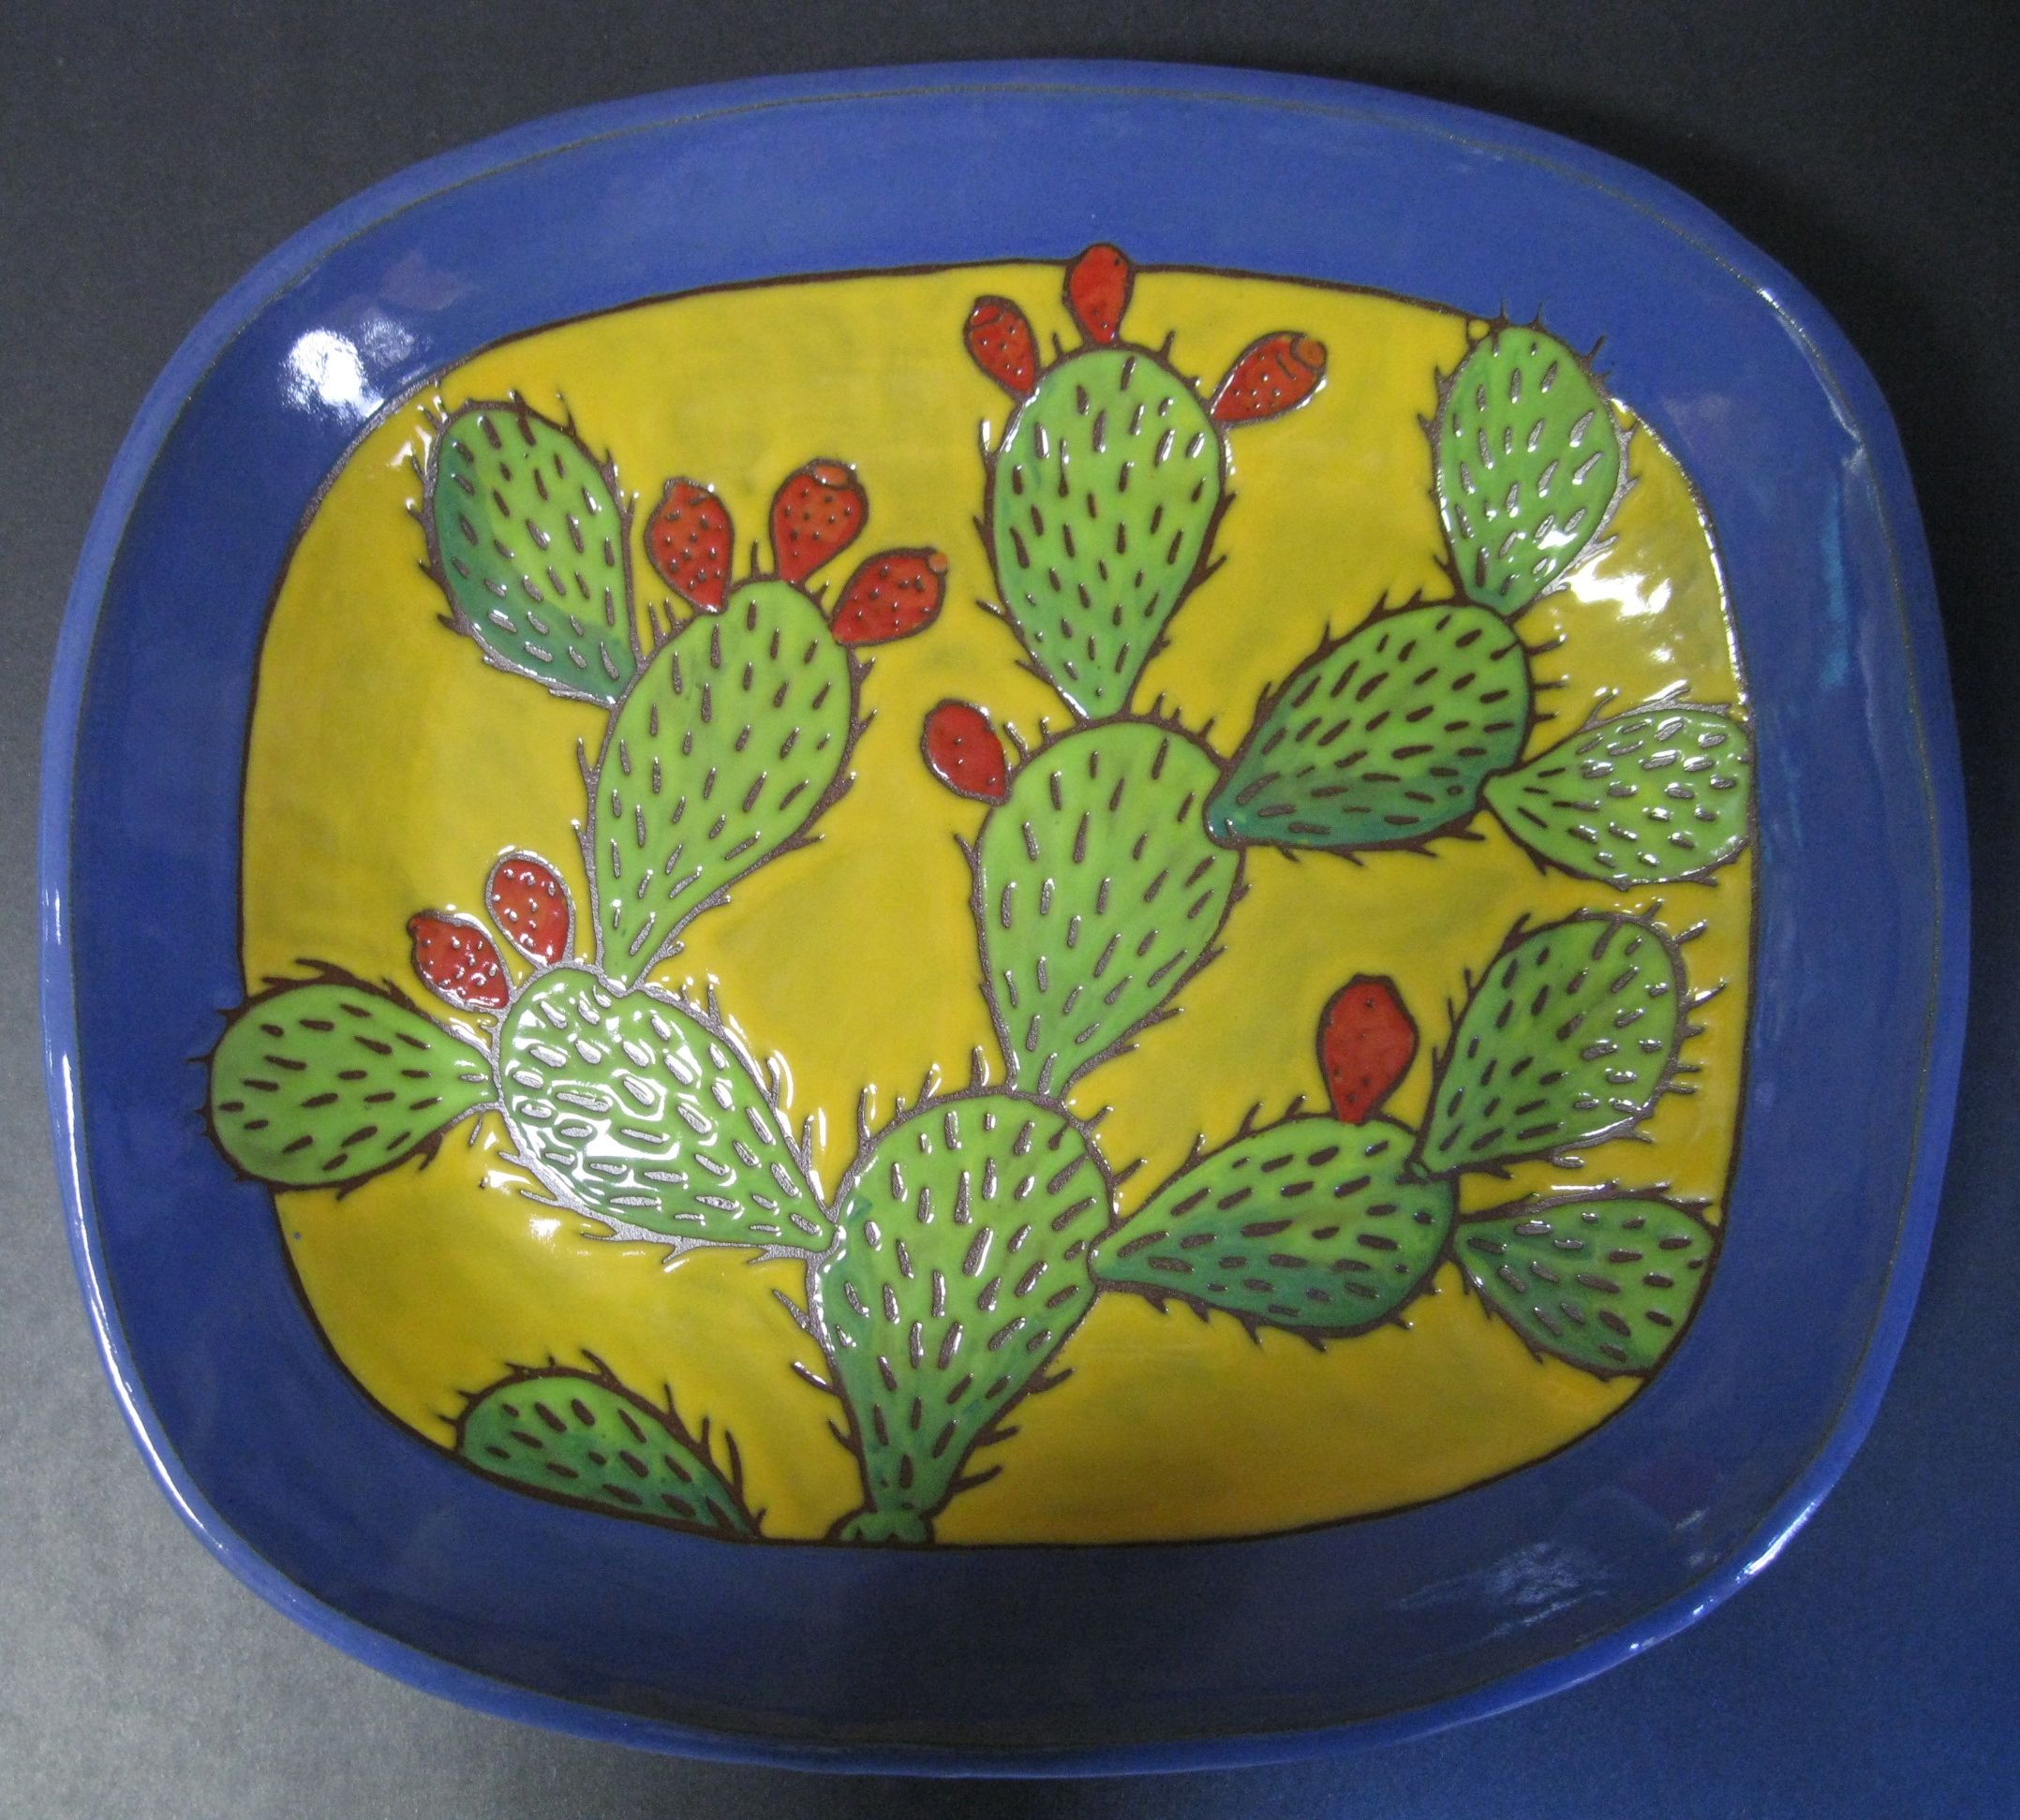 Blue and Yellow Platter with Cuerda Seca Cactus Design